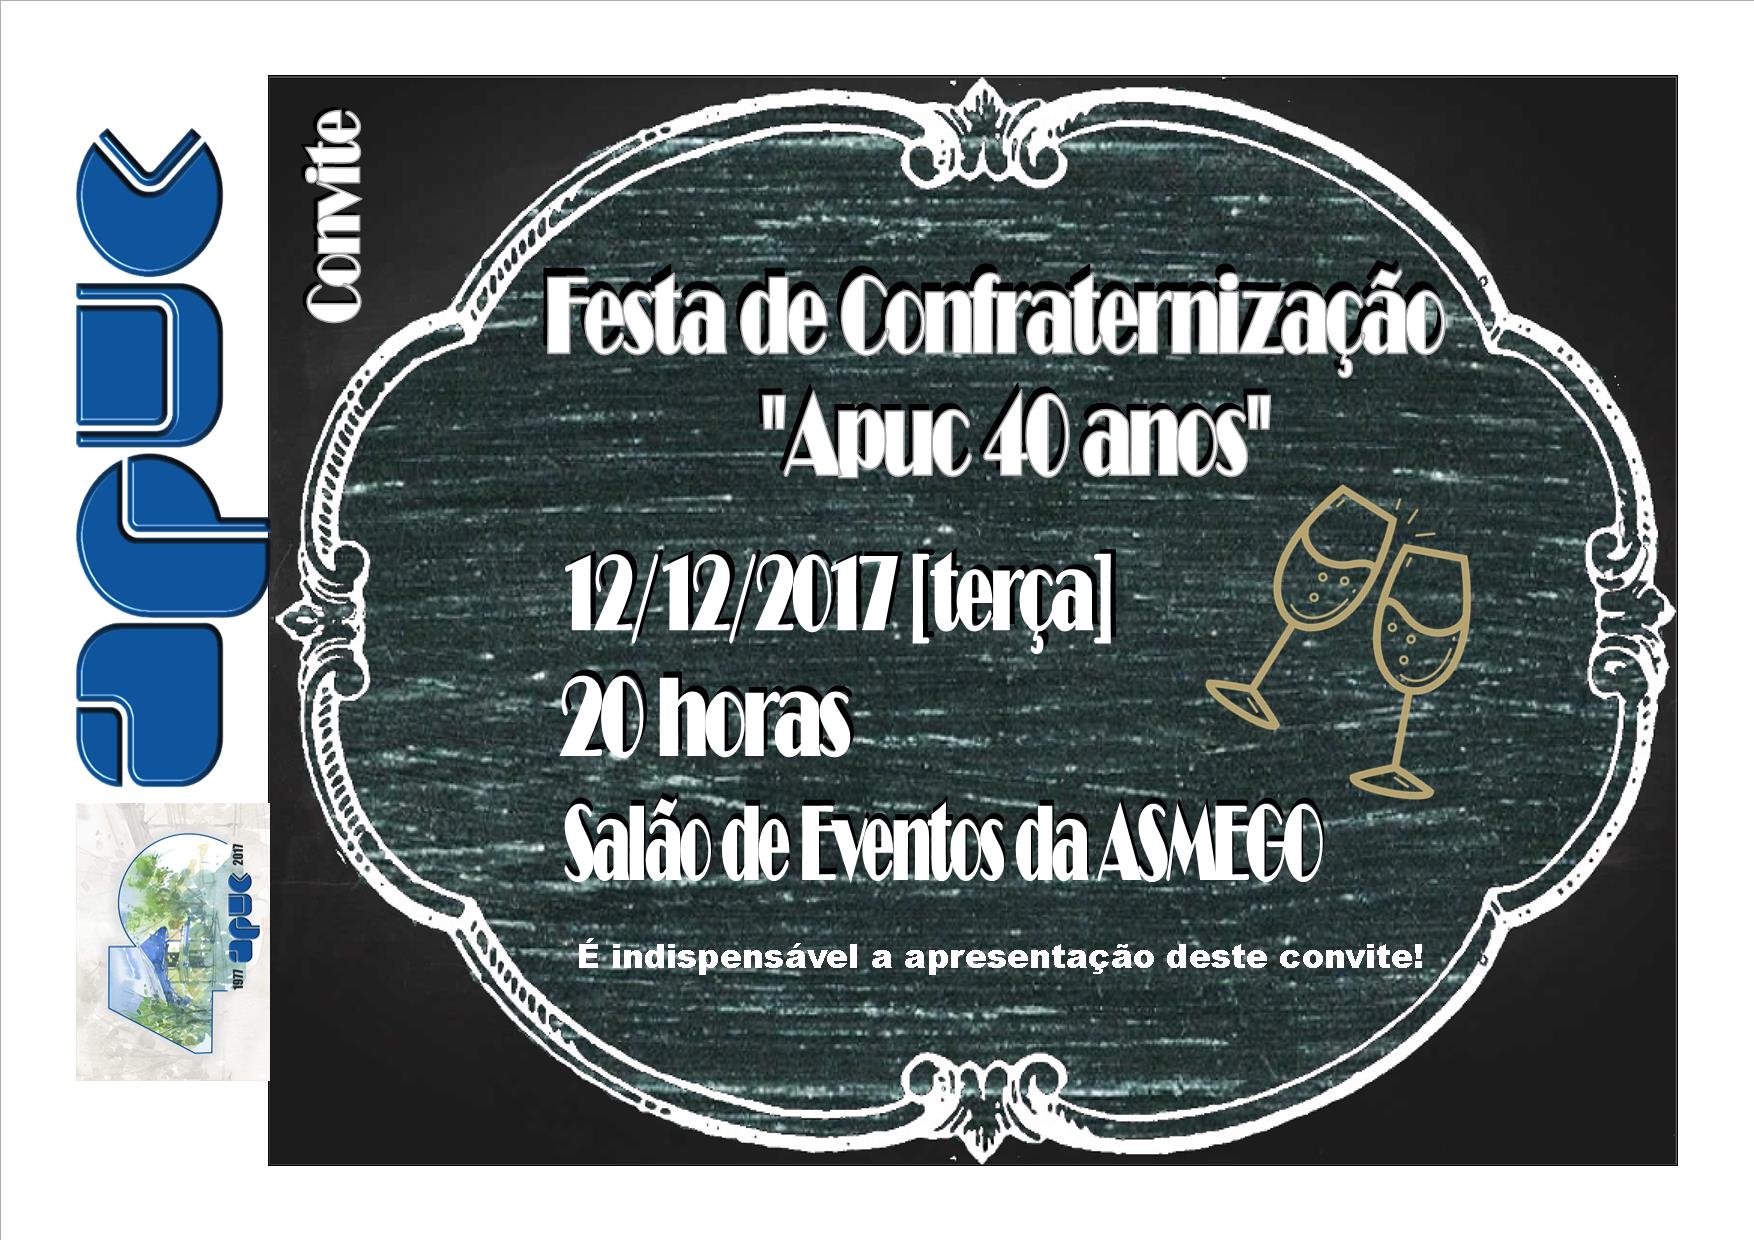 08.11.2017 Cartaz Festa de Confraternizacao 1 convite b val